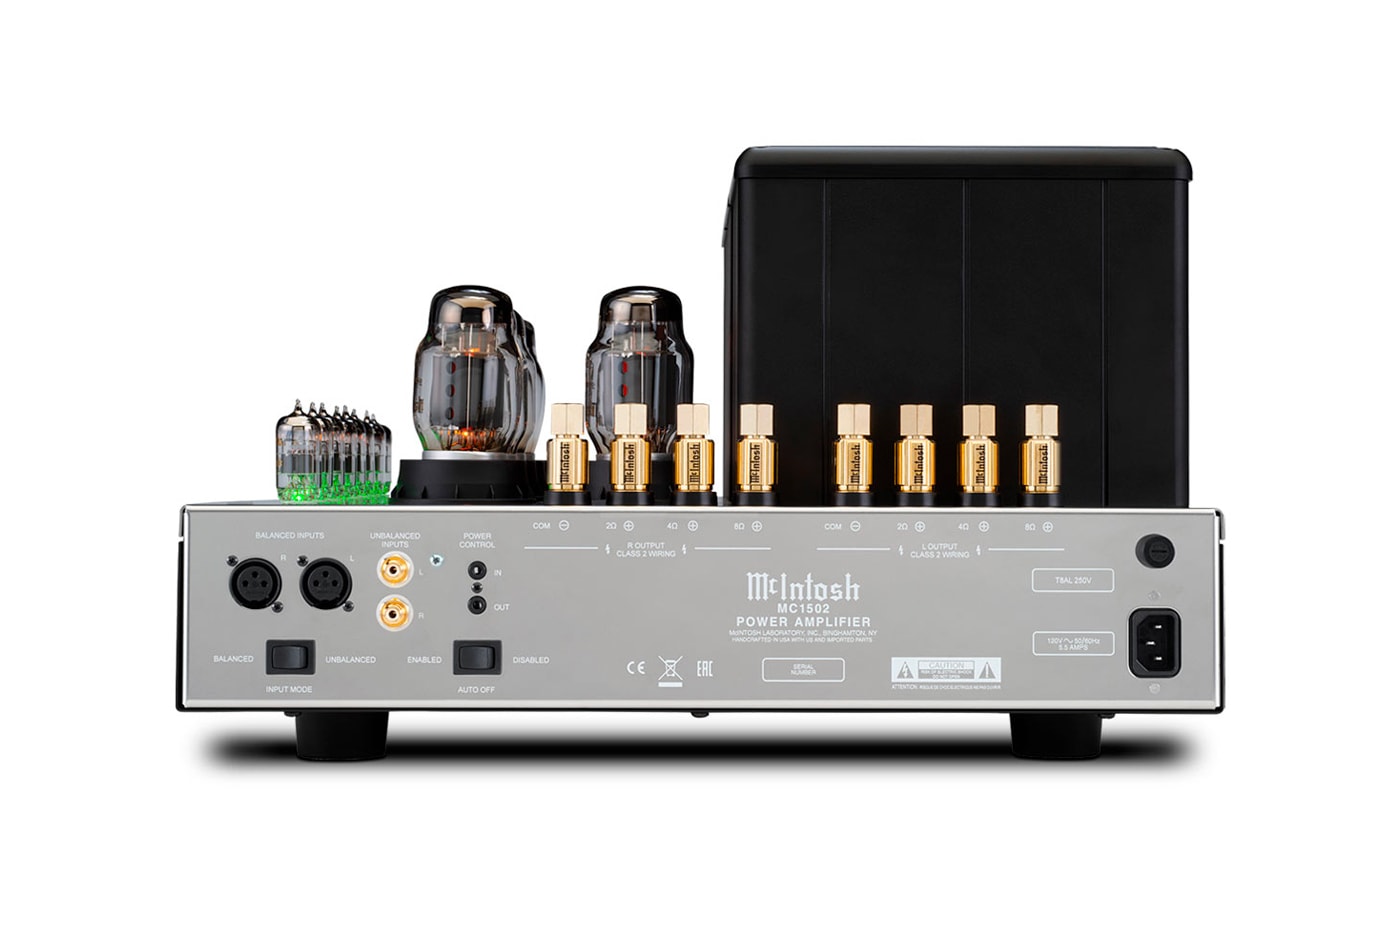 McIntosh New MC1502 Vacuum Tube Amp Was Made for Serious Audiophiles audiophile MC275 MC2152 home audio pre-amp sound McIntosh Lab